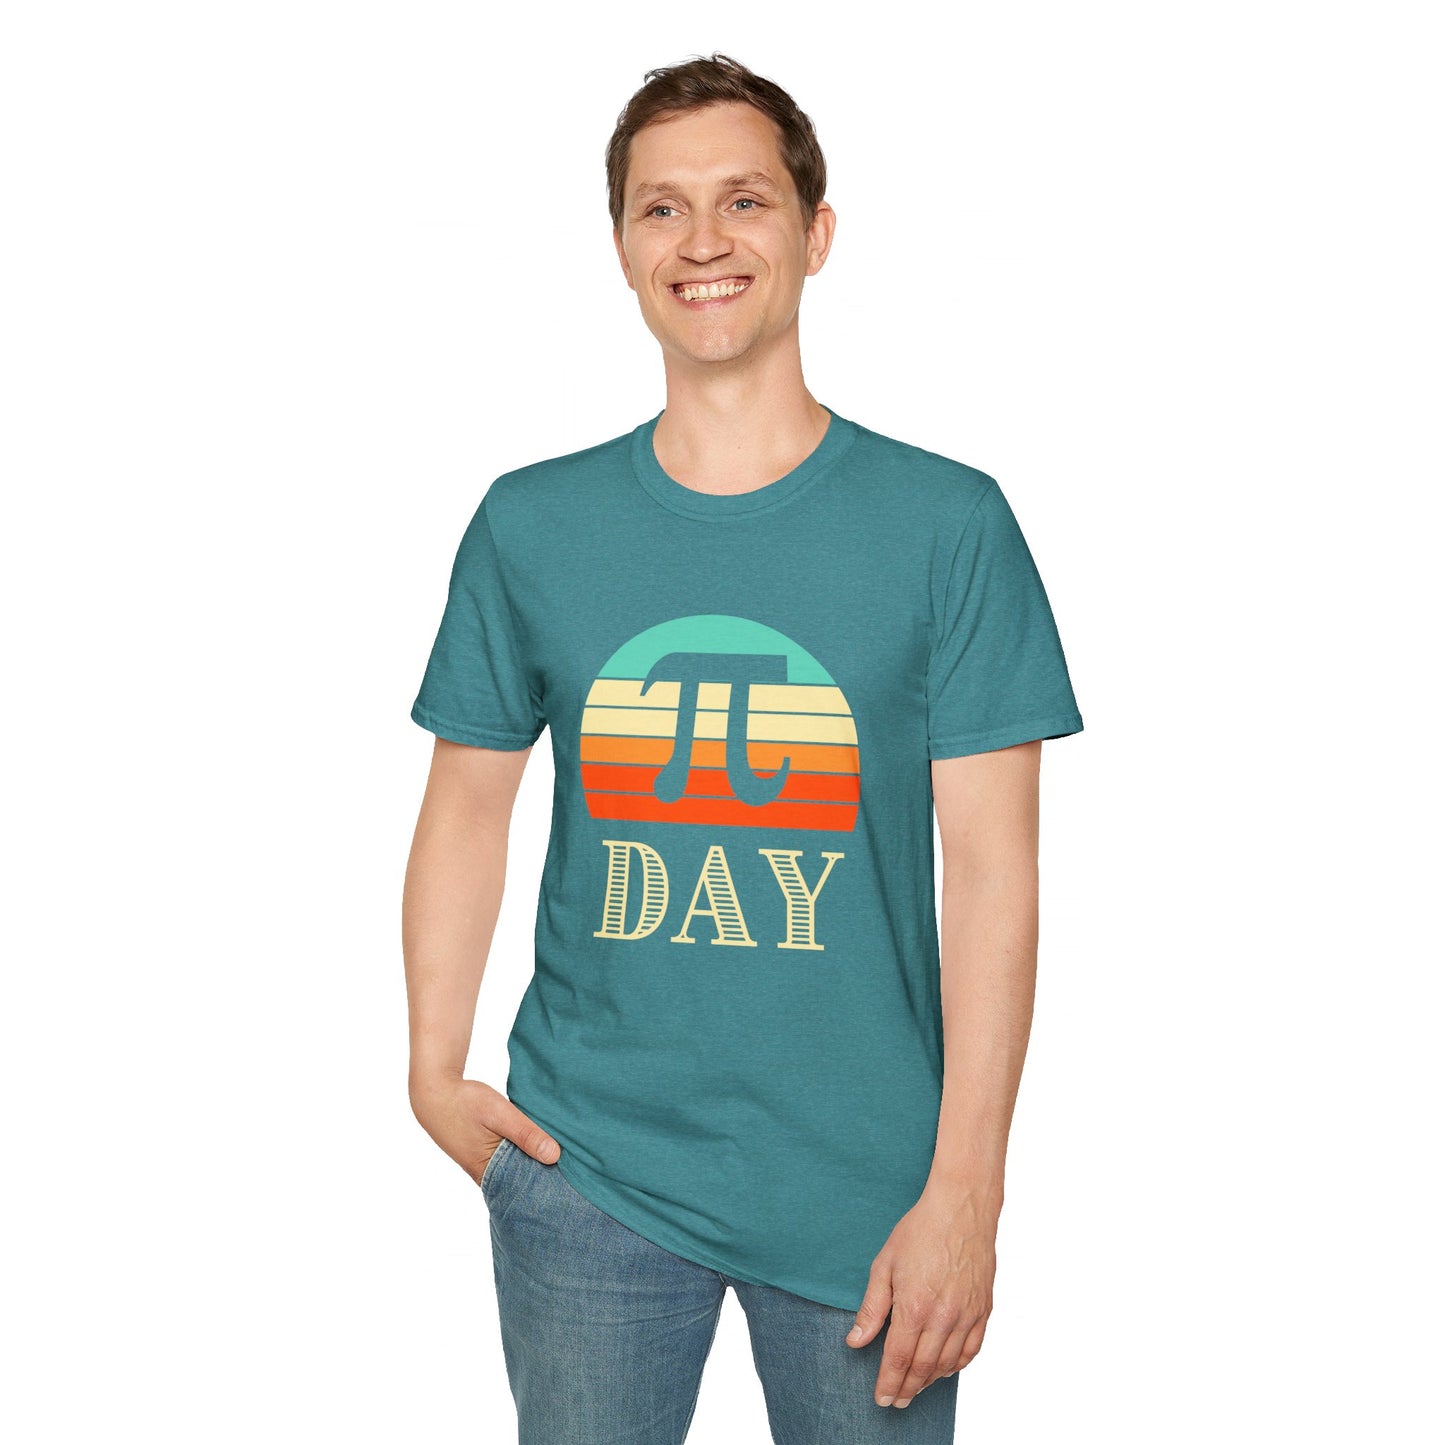 Pi Day T-Shirt - Nerd Stuff